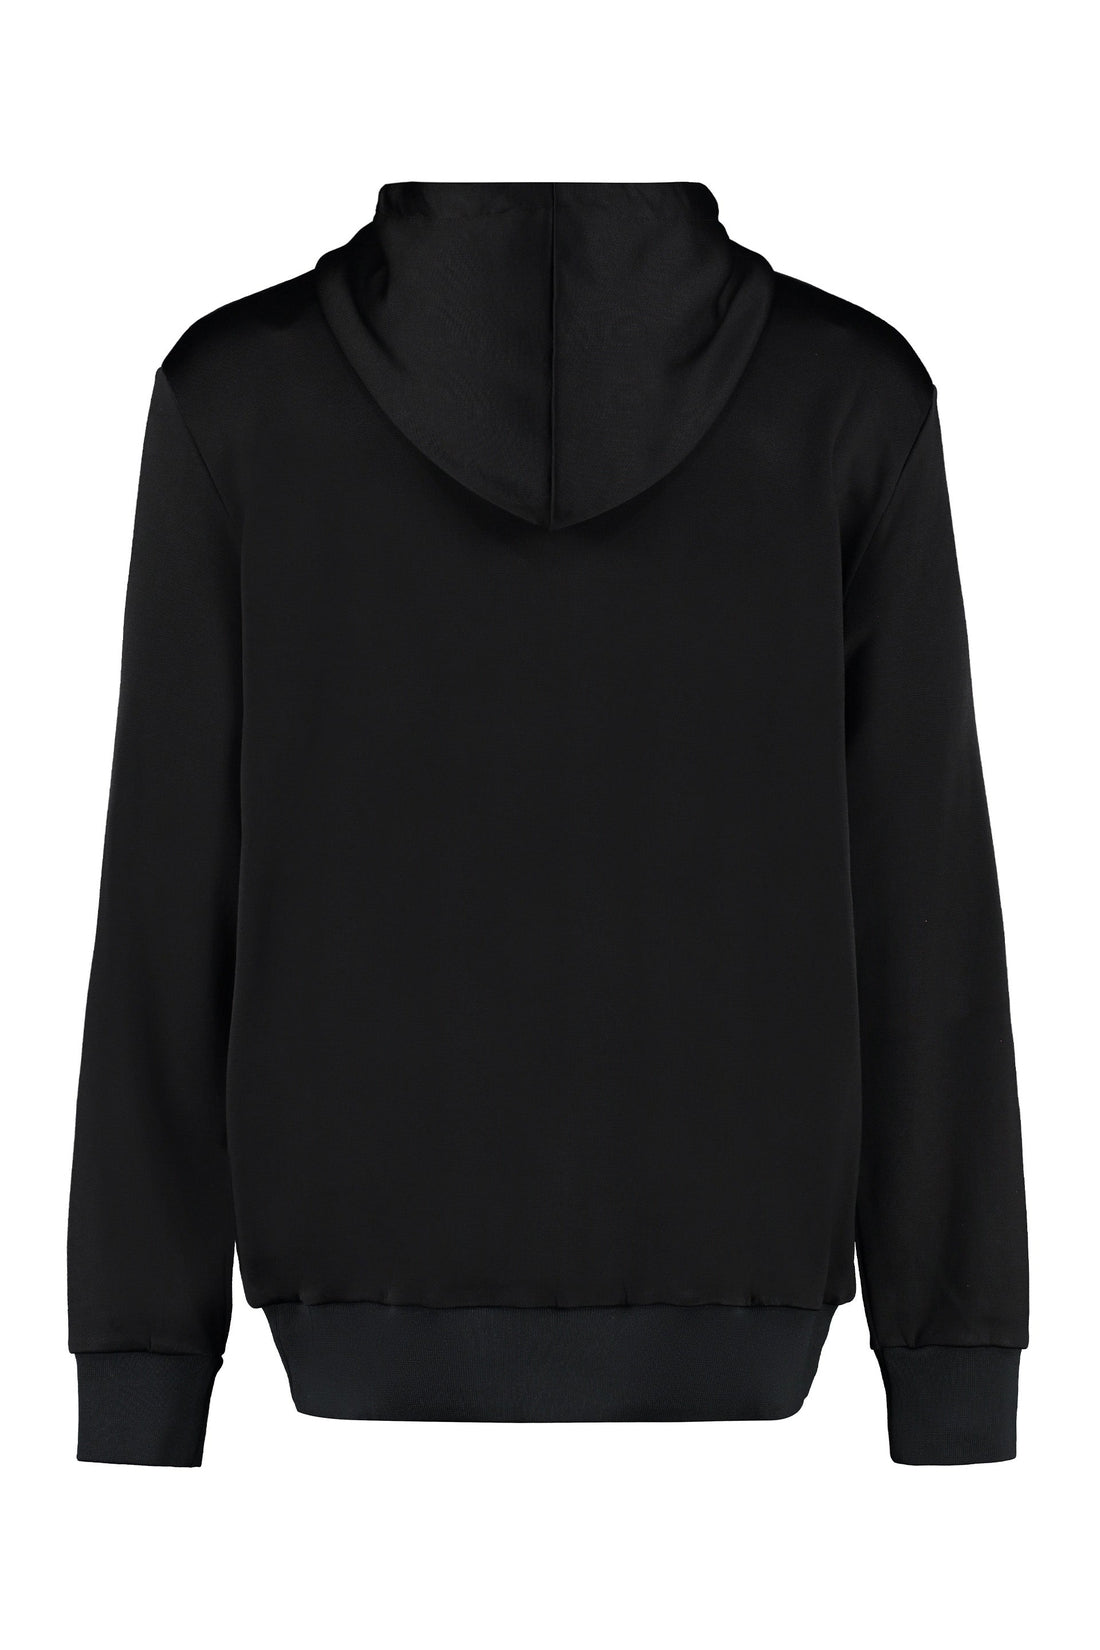 Alexander McQueen-OUTLET-SALE-Printed hoodie-ARCHIVIST